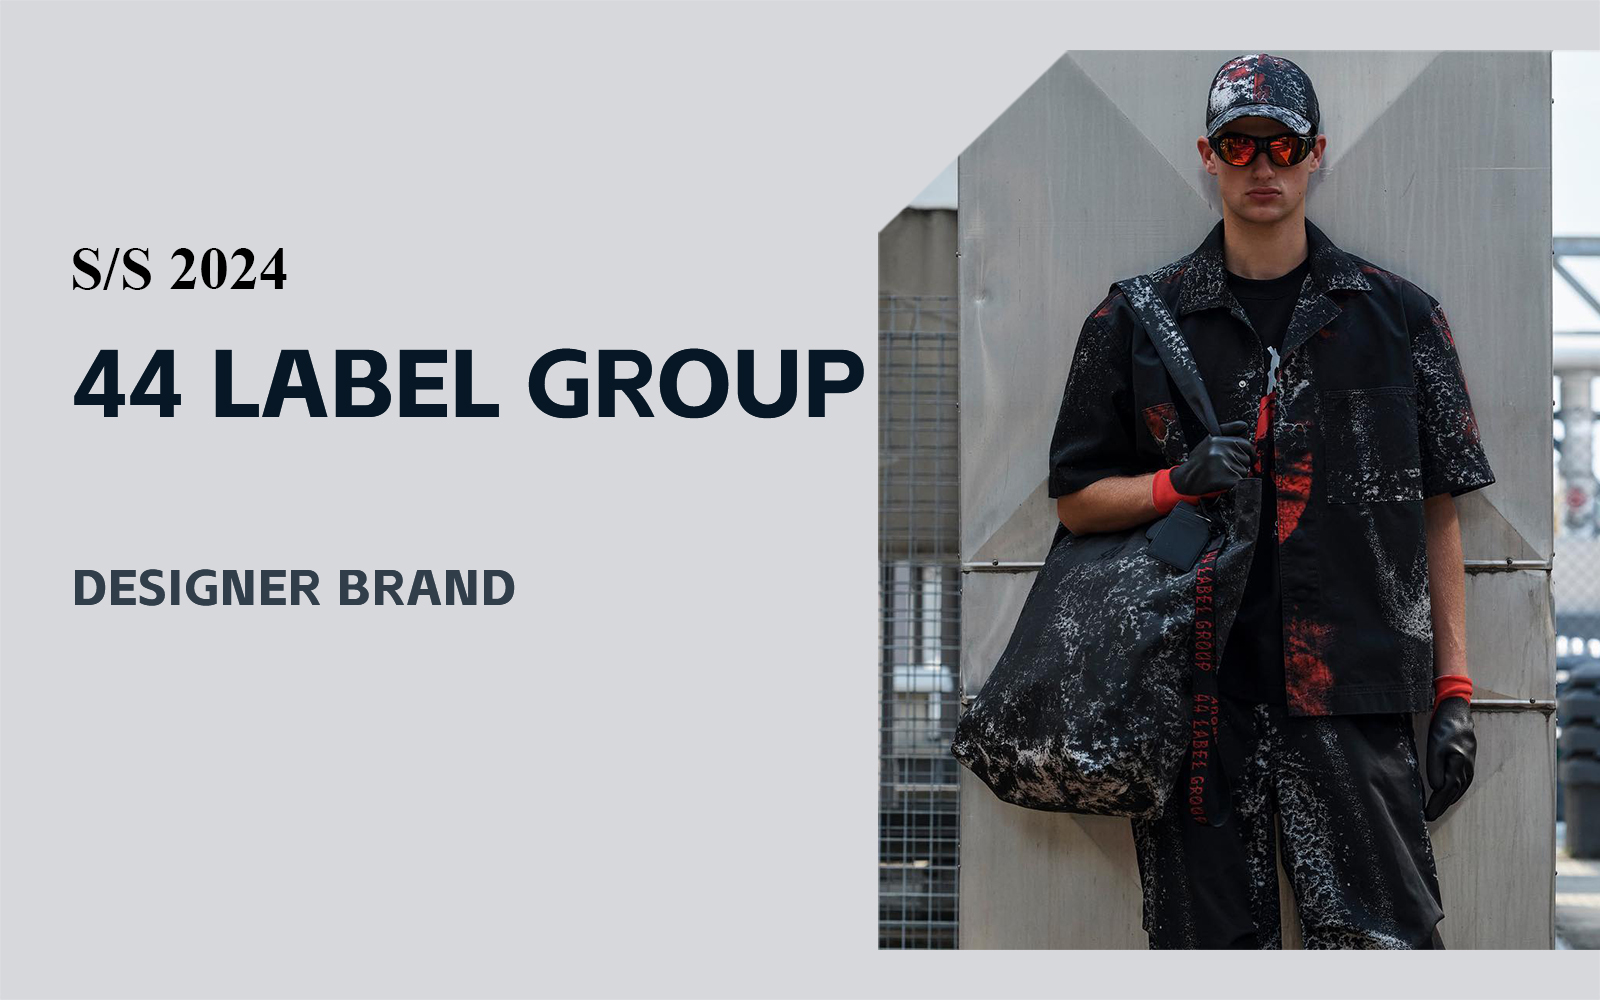 Rebel Gene -- The Analysis of 44 Label Group The Menswear Designer Brand